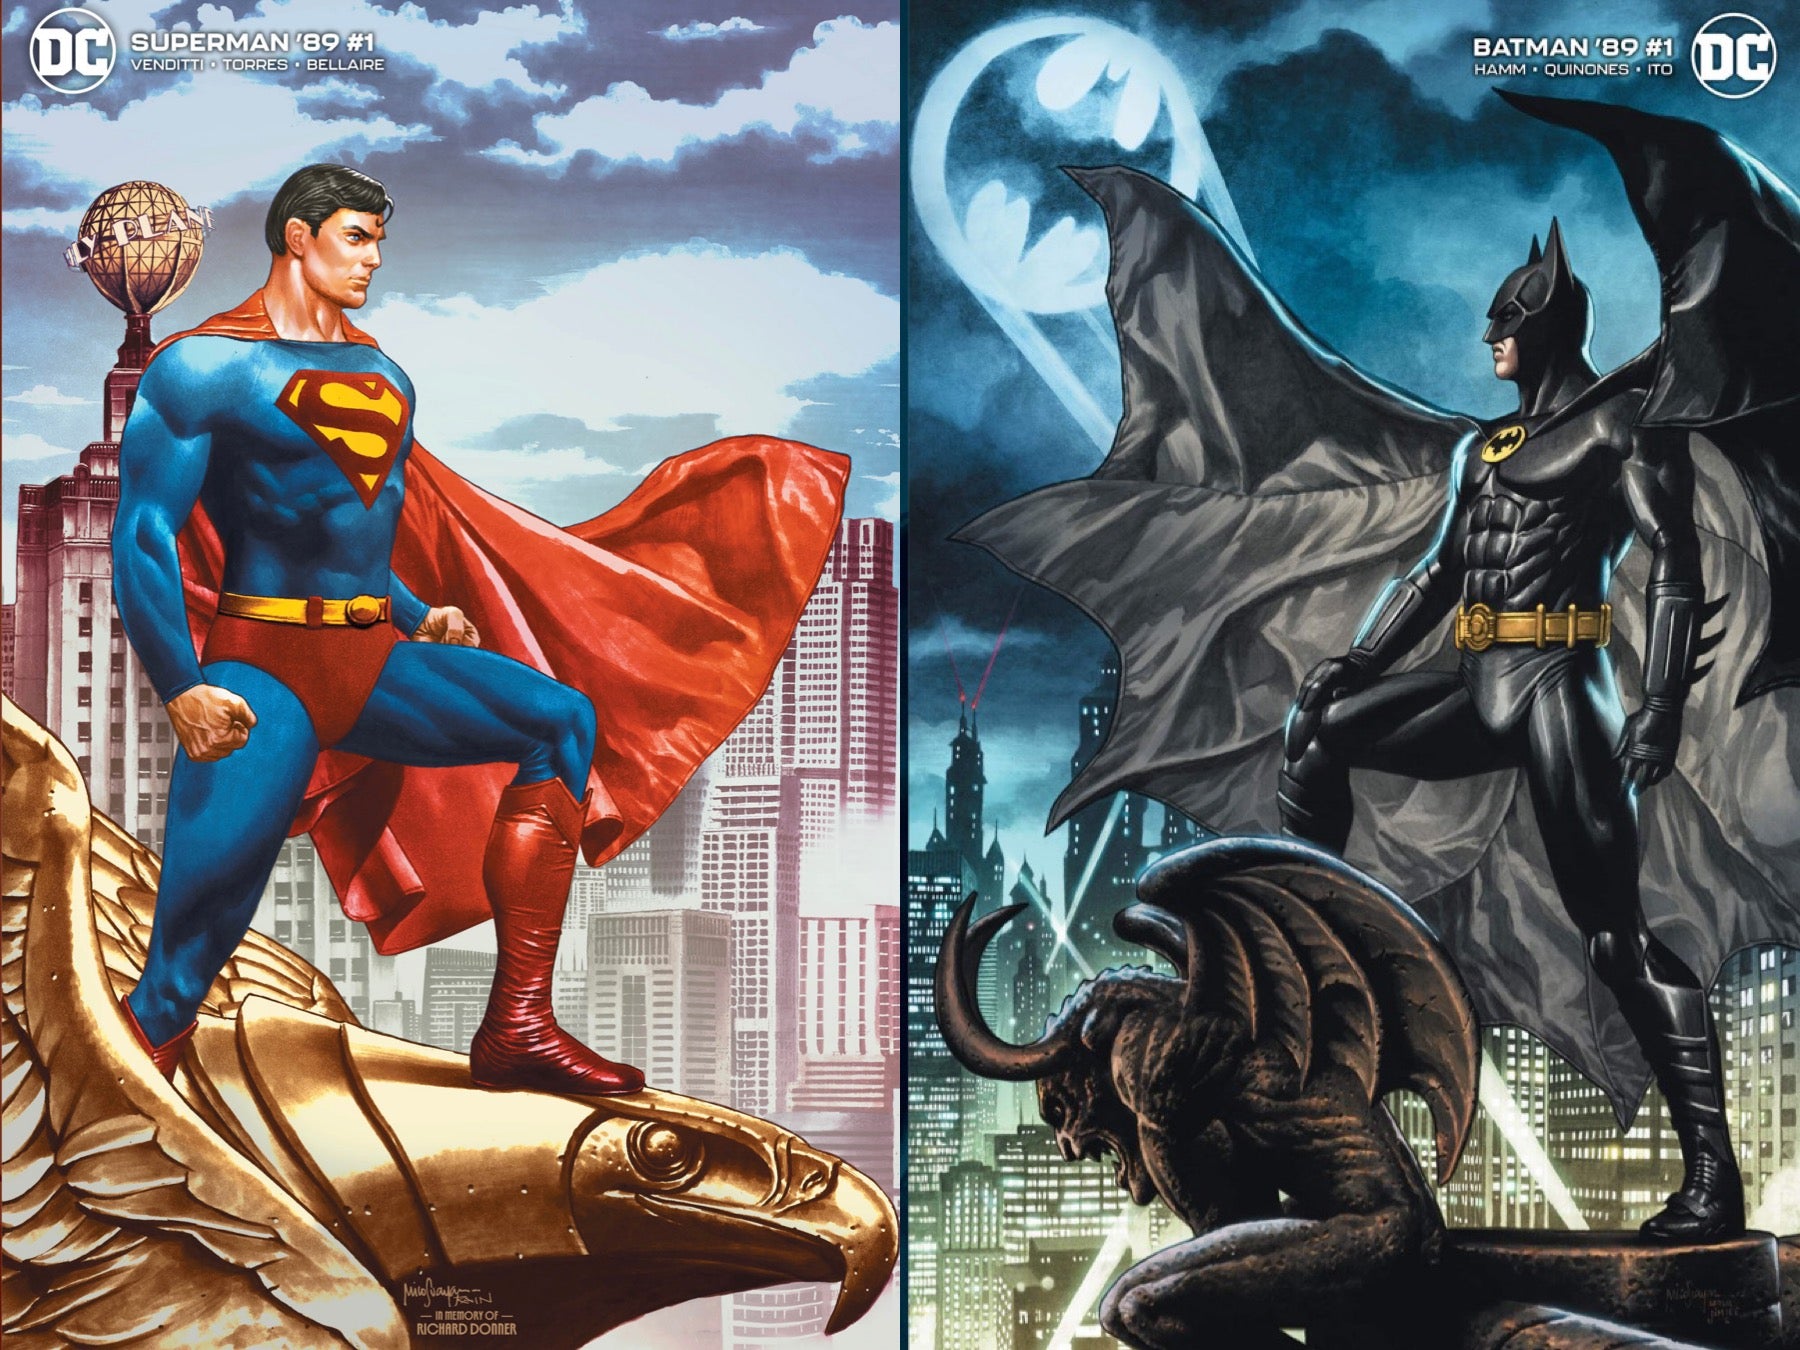 08/24/2021 SUPERMAN 78 #1 & BATMAN 89 #1 MICO SUAYAN EXCLUSIVE "WORLDS FINEST" COMBO